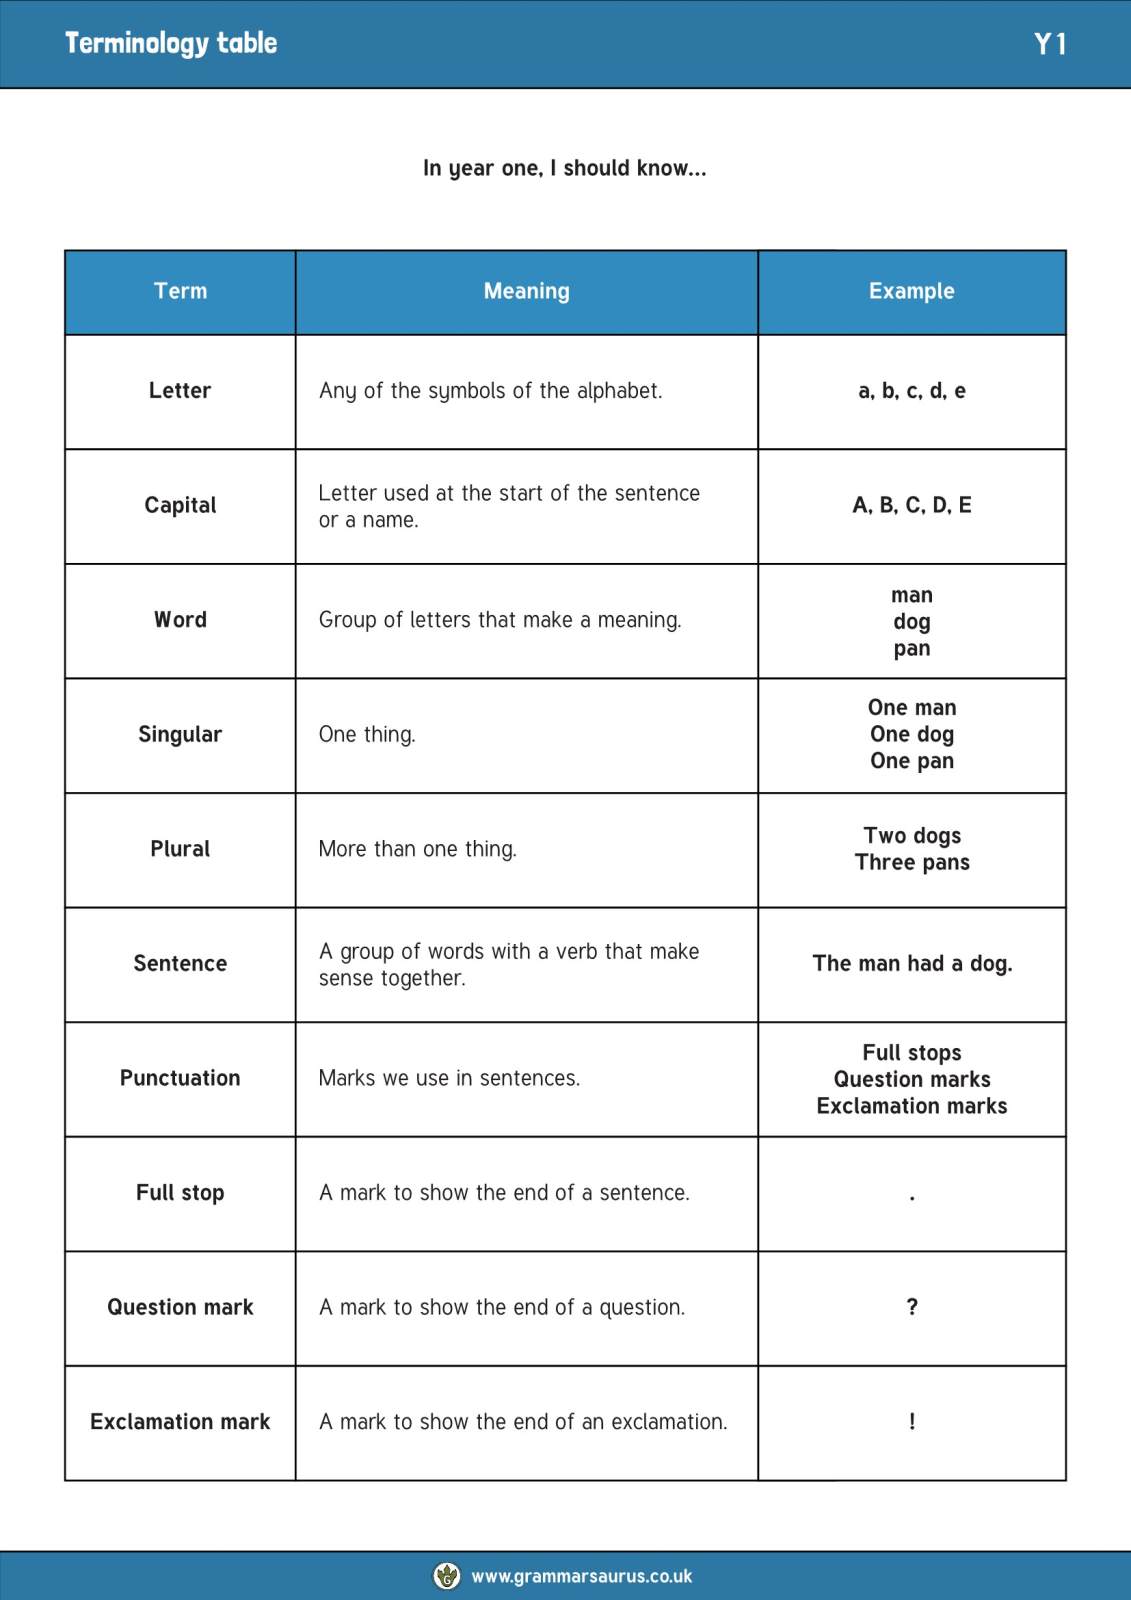 Grammar terminology table Yr1